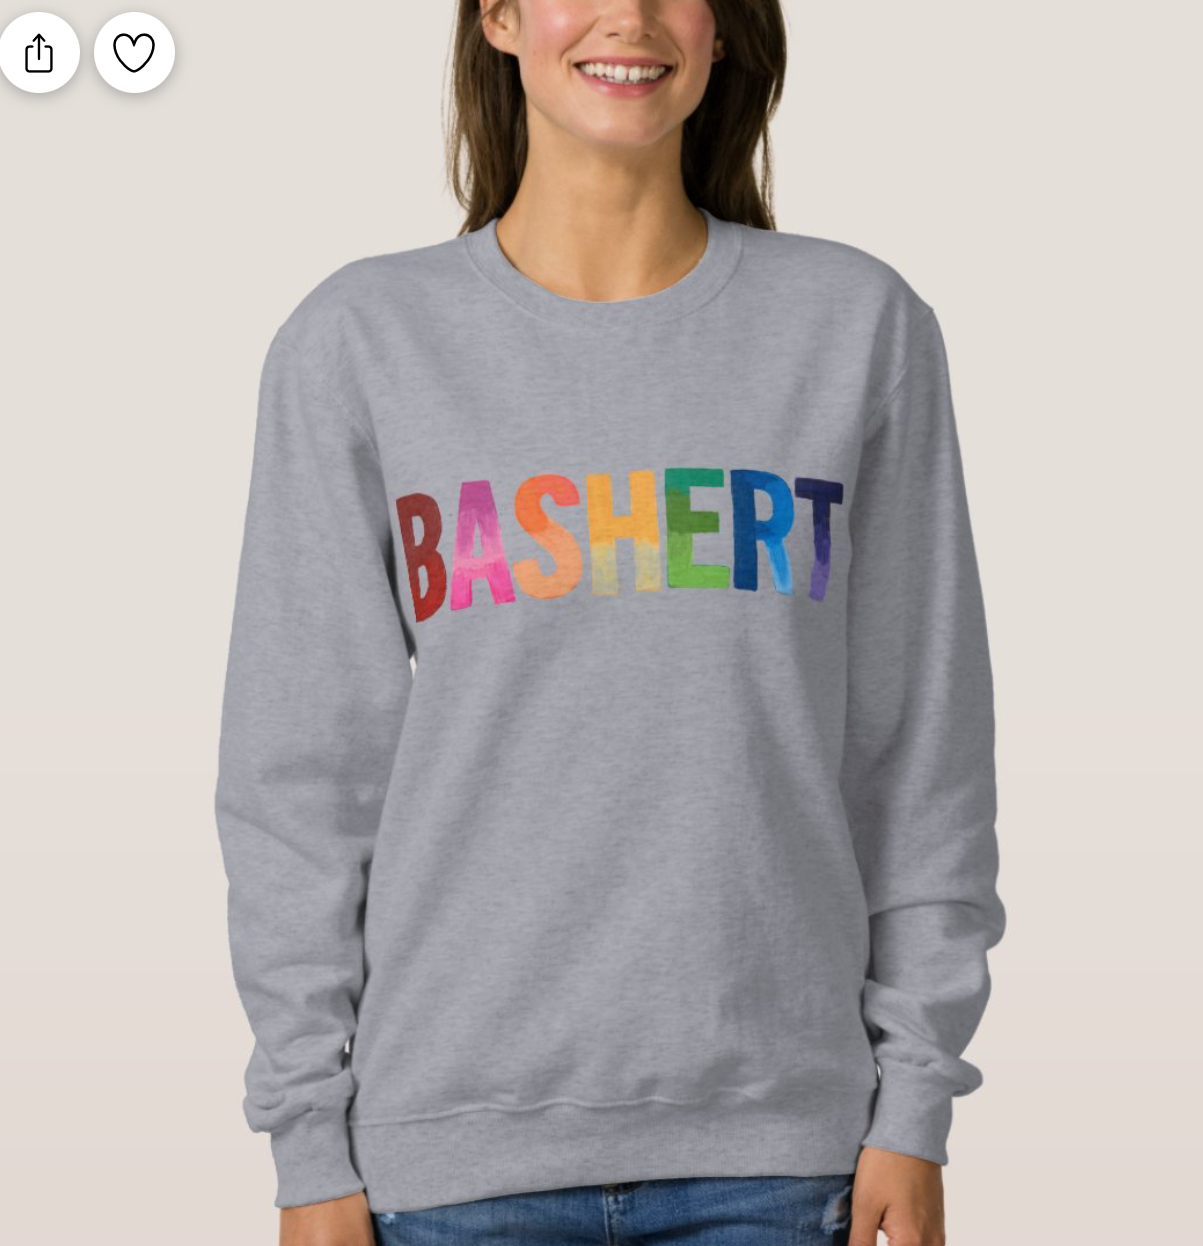 Bashert Cotton Sweatshirt